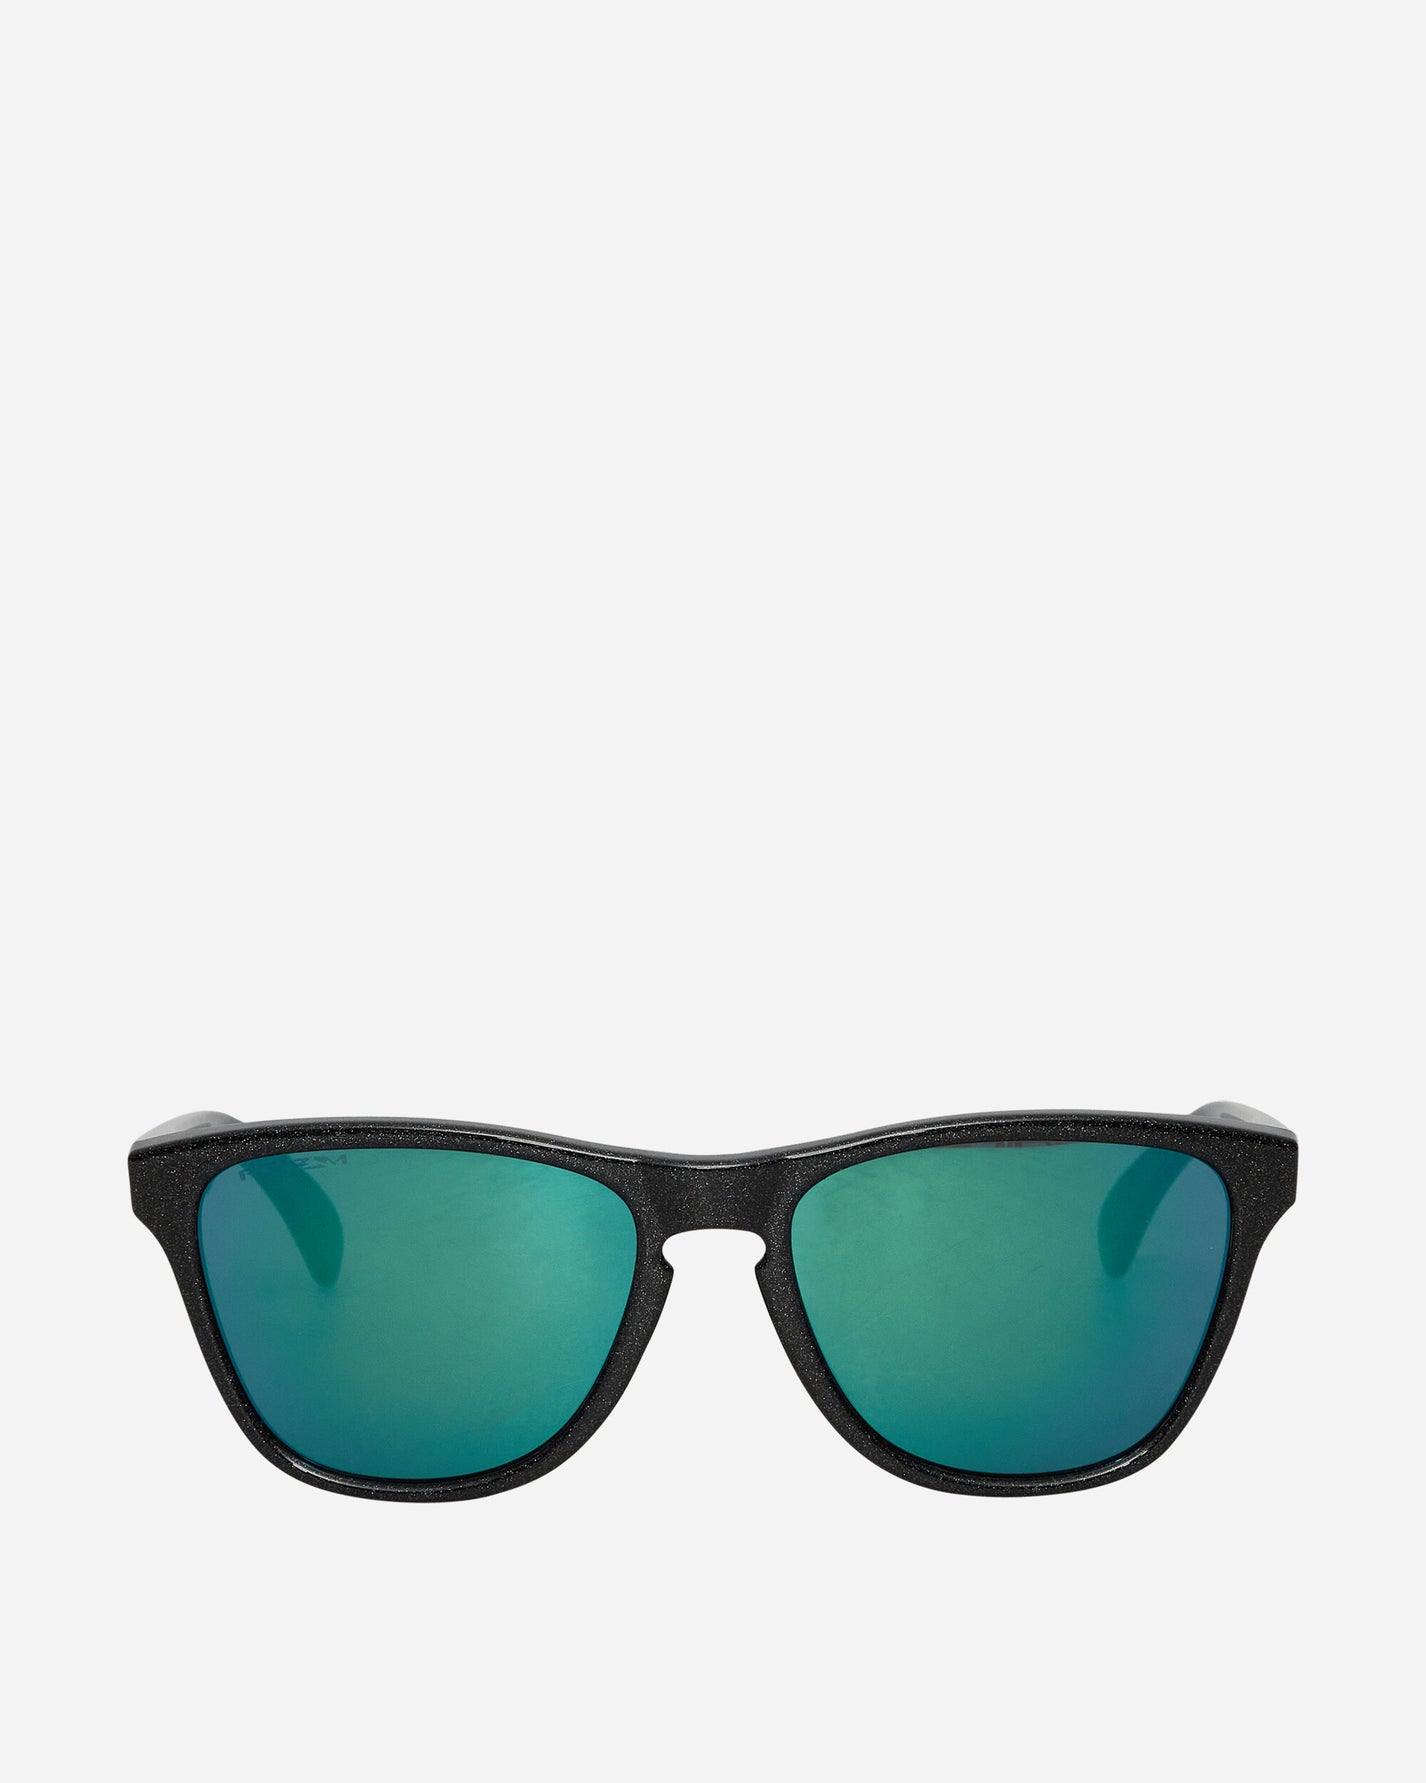 Oakley Frogskins Xs Dark Galaxy Eyewear Sunglasses OJ9006 41